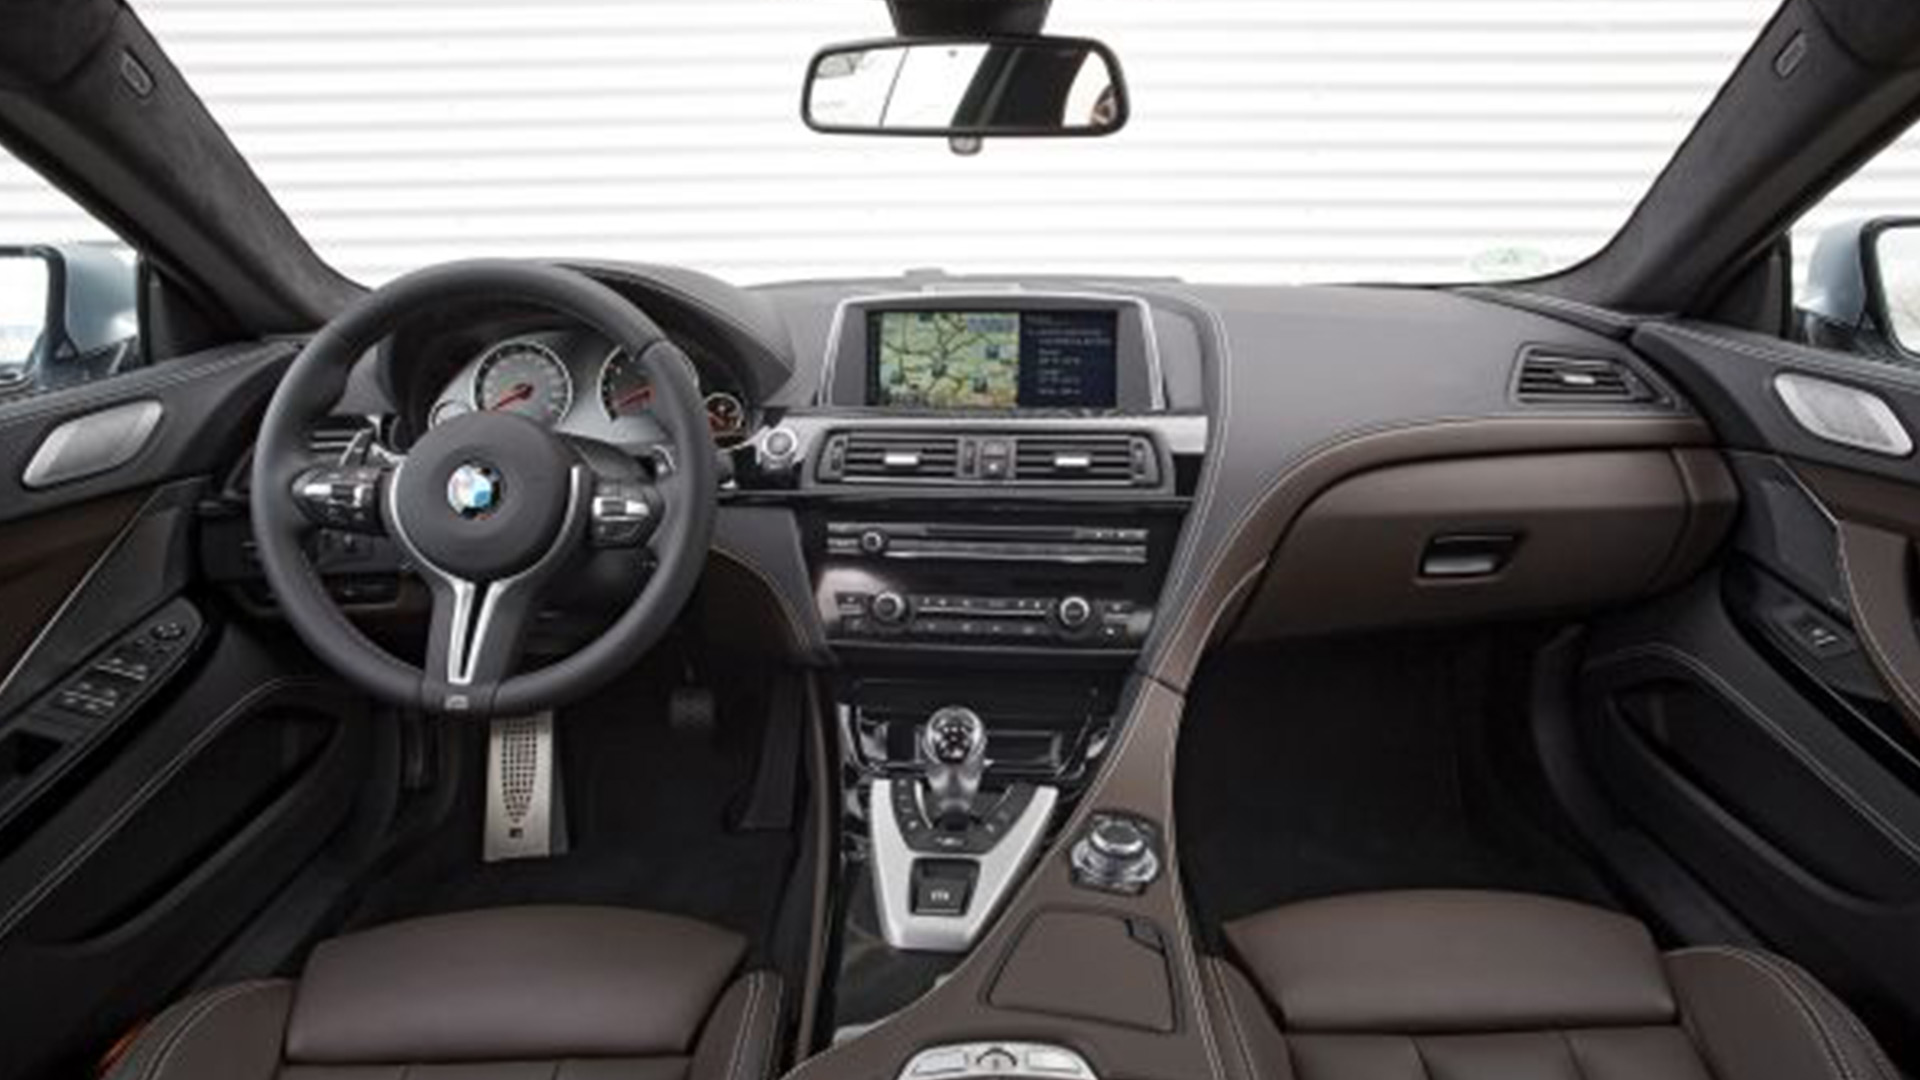 BMW M6 Gran Coupe 2014